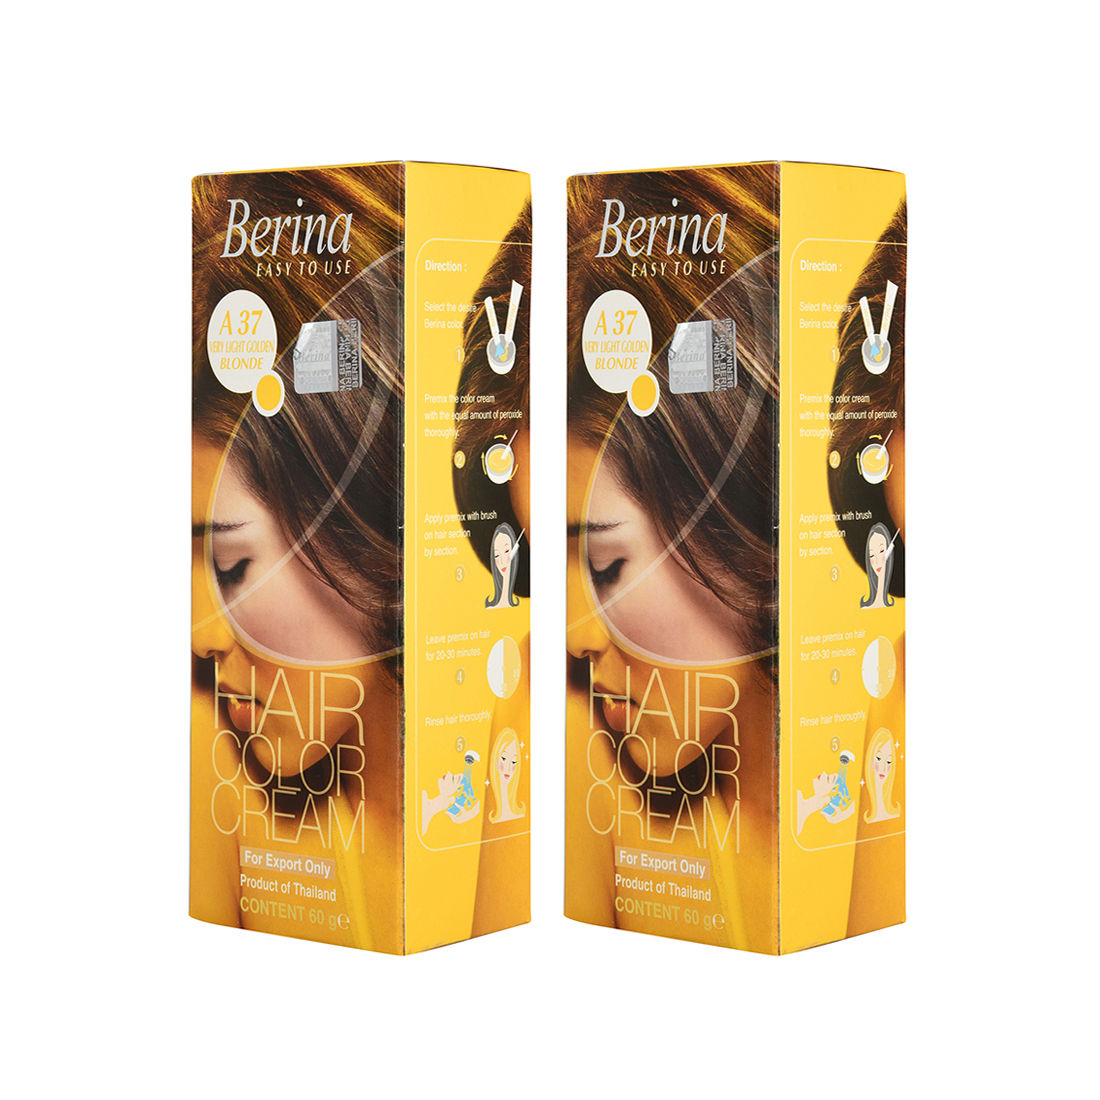 Shop Berina Hair Color online | Lazada.com.my